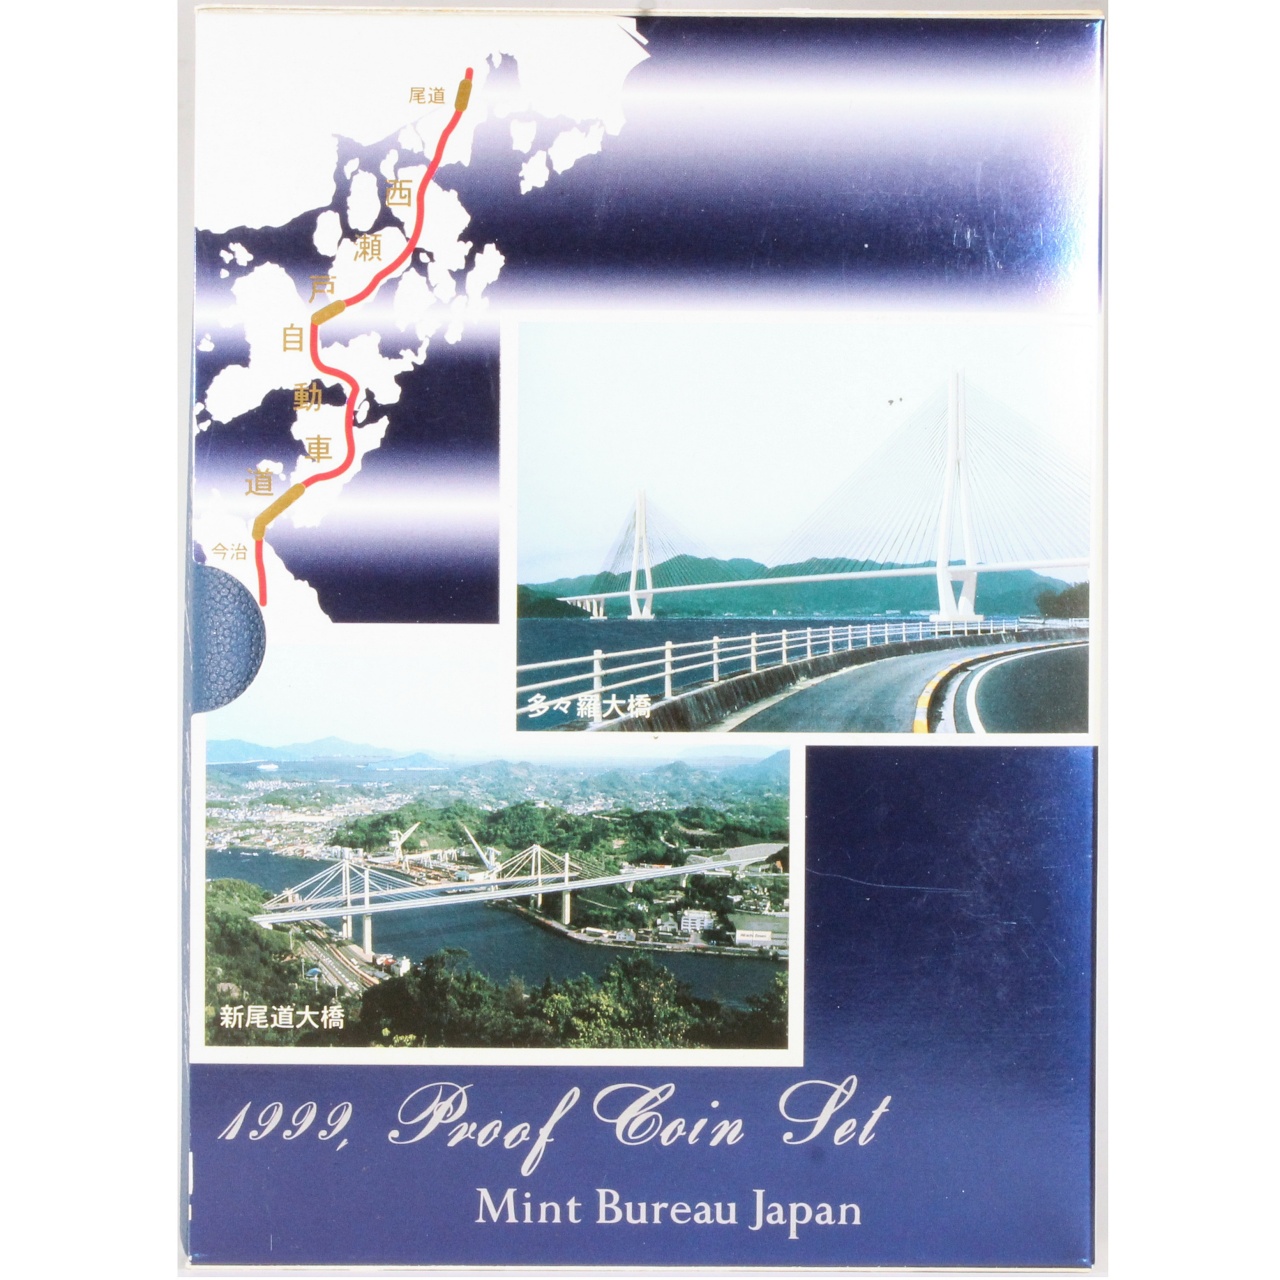 新尾道大橋 多々羅大橋 来島海峡大橋 開通記念 プルーフ貨幣セット